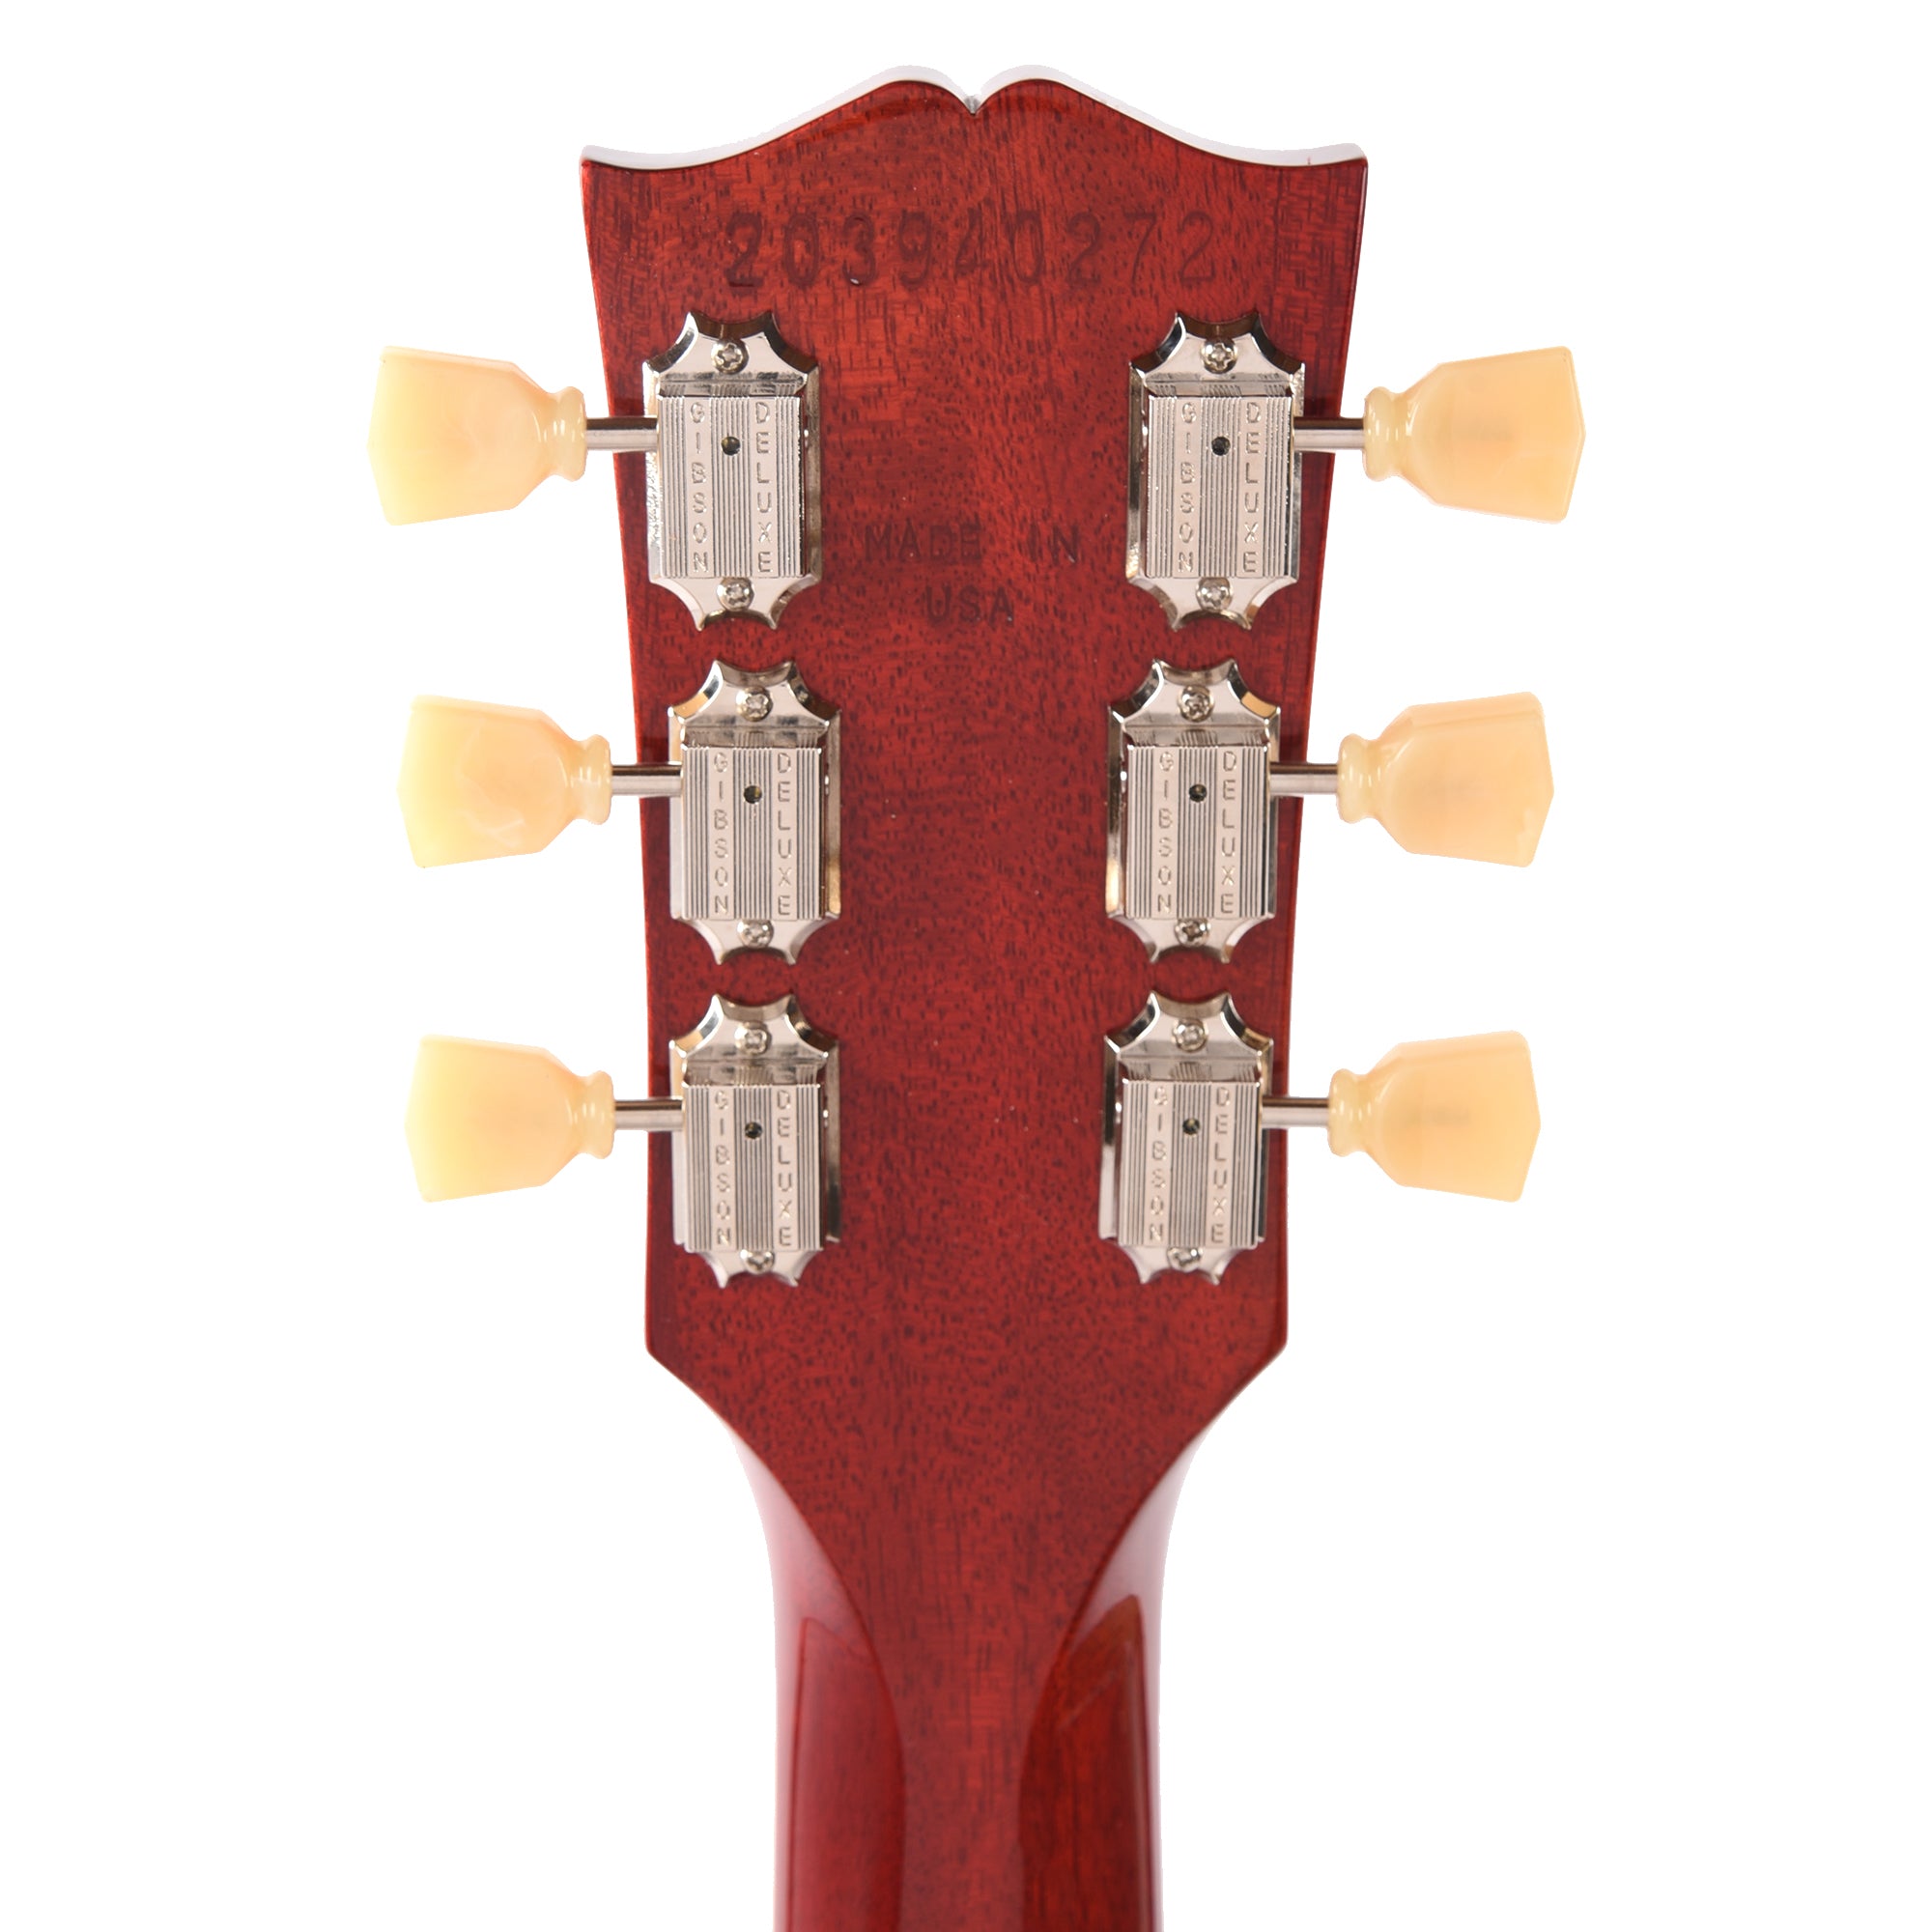 Gibson Original ES-335 LEFTY Sixties Cherry